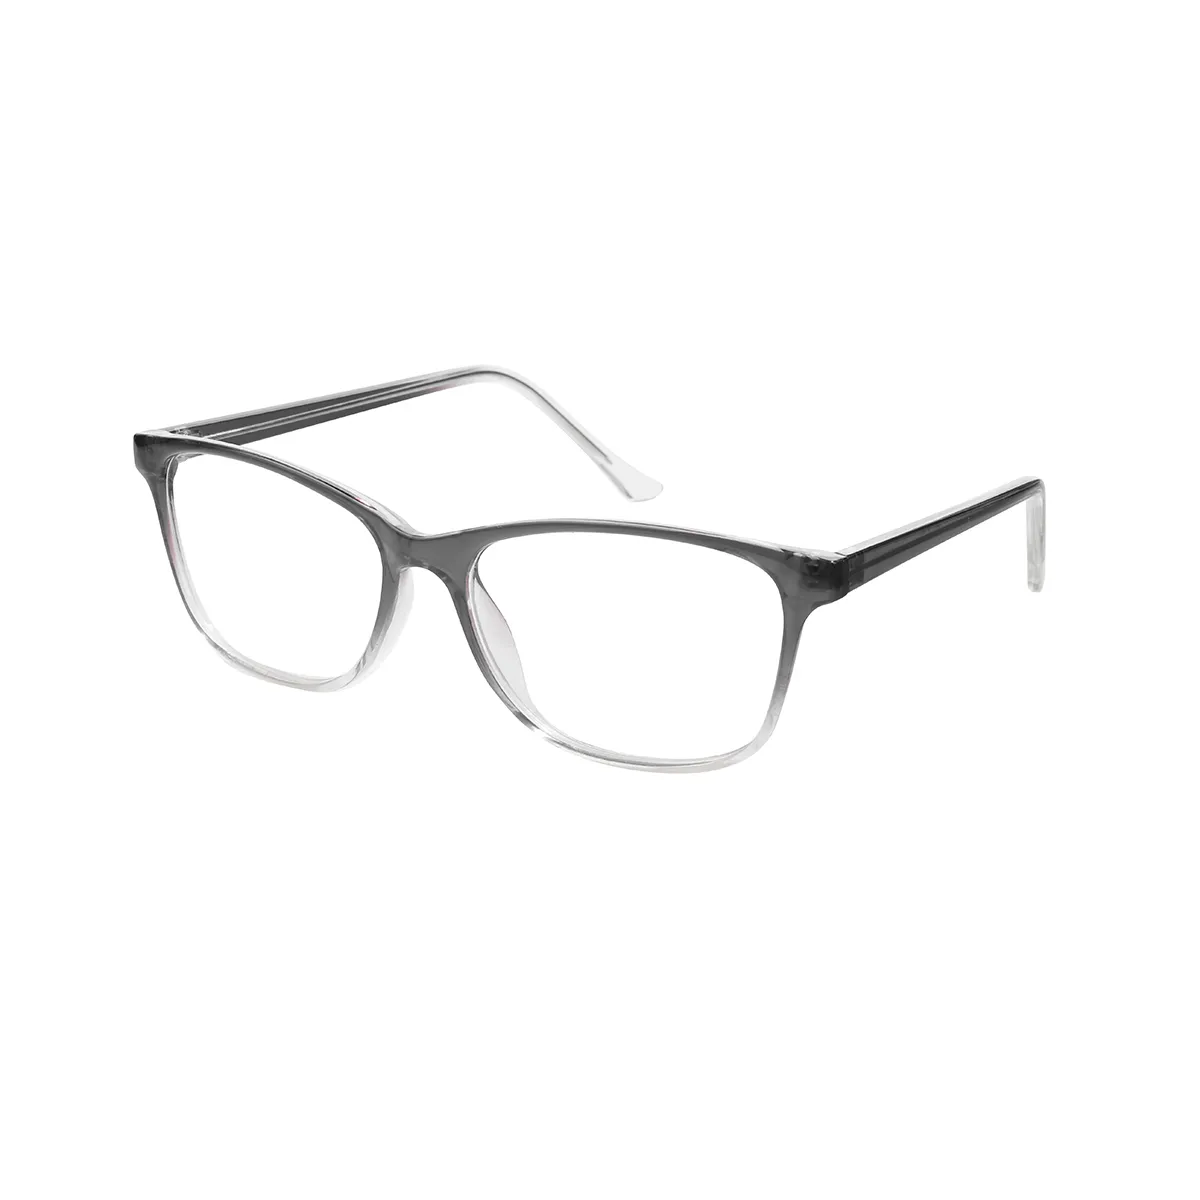 Queenie - Rectangle Gray Glasses for Women